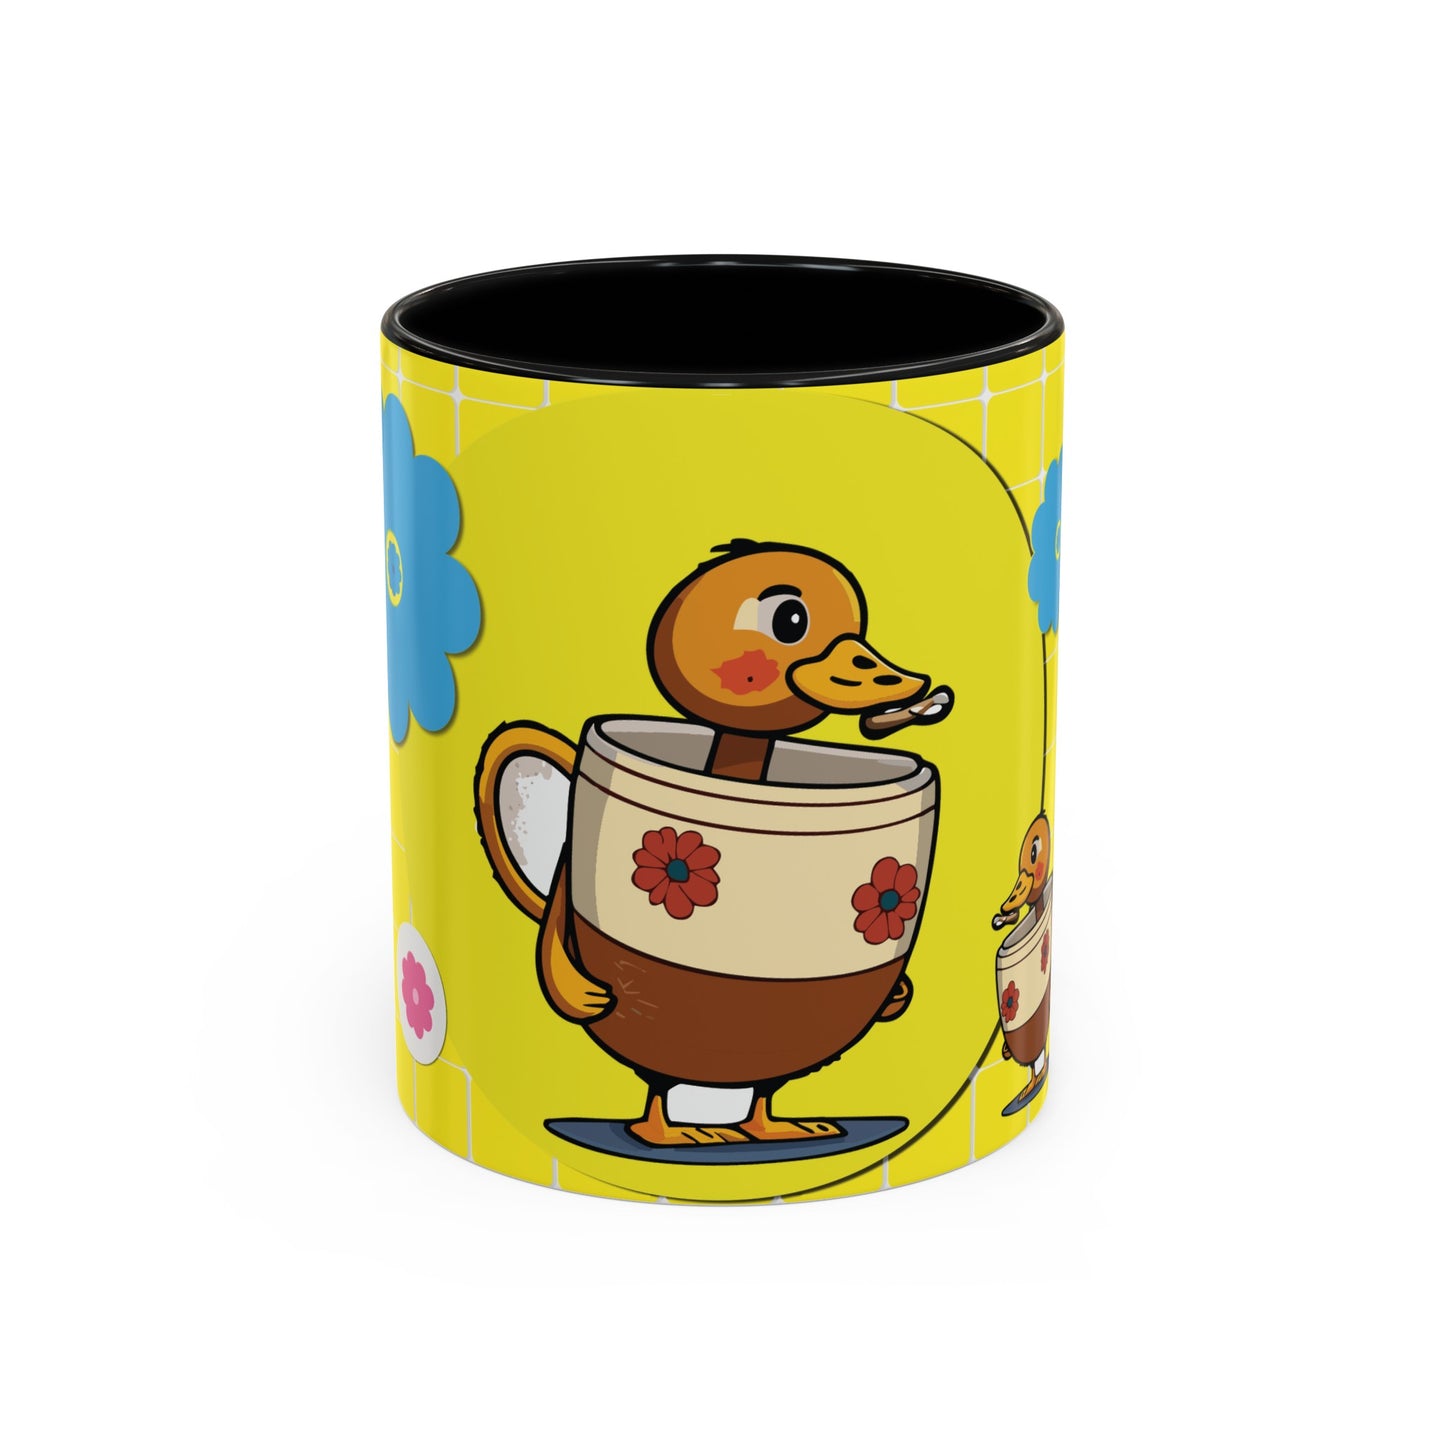 Cute Duck Mug